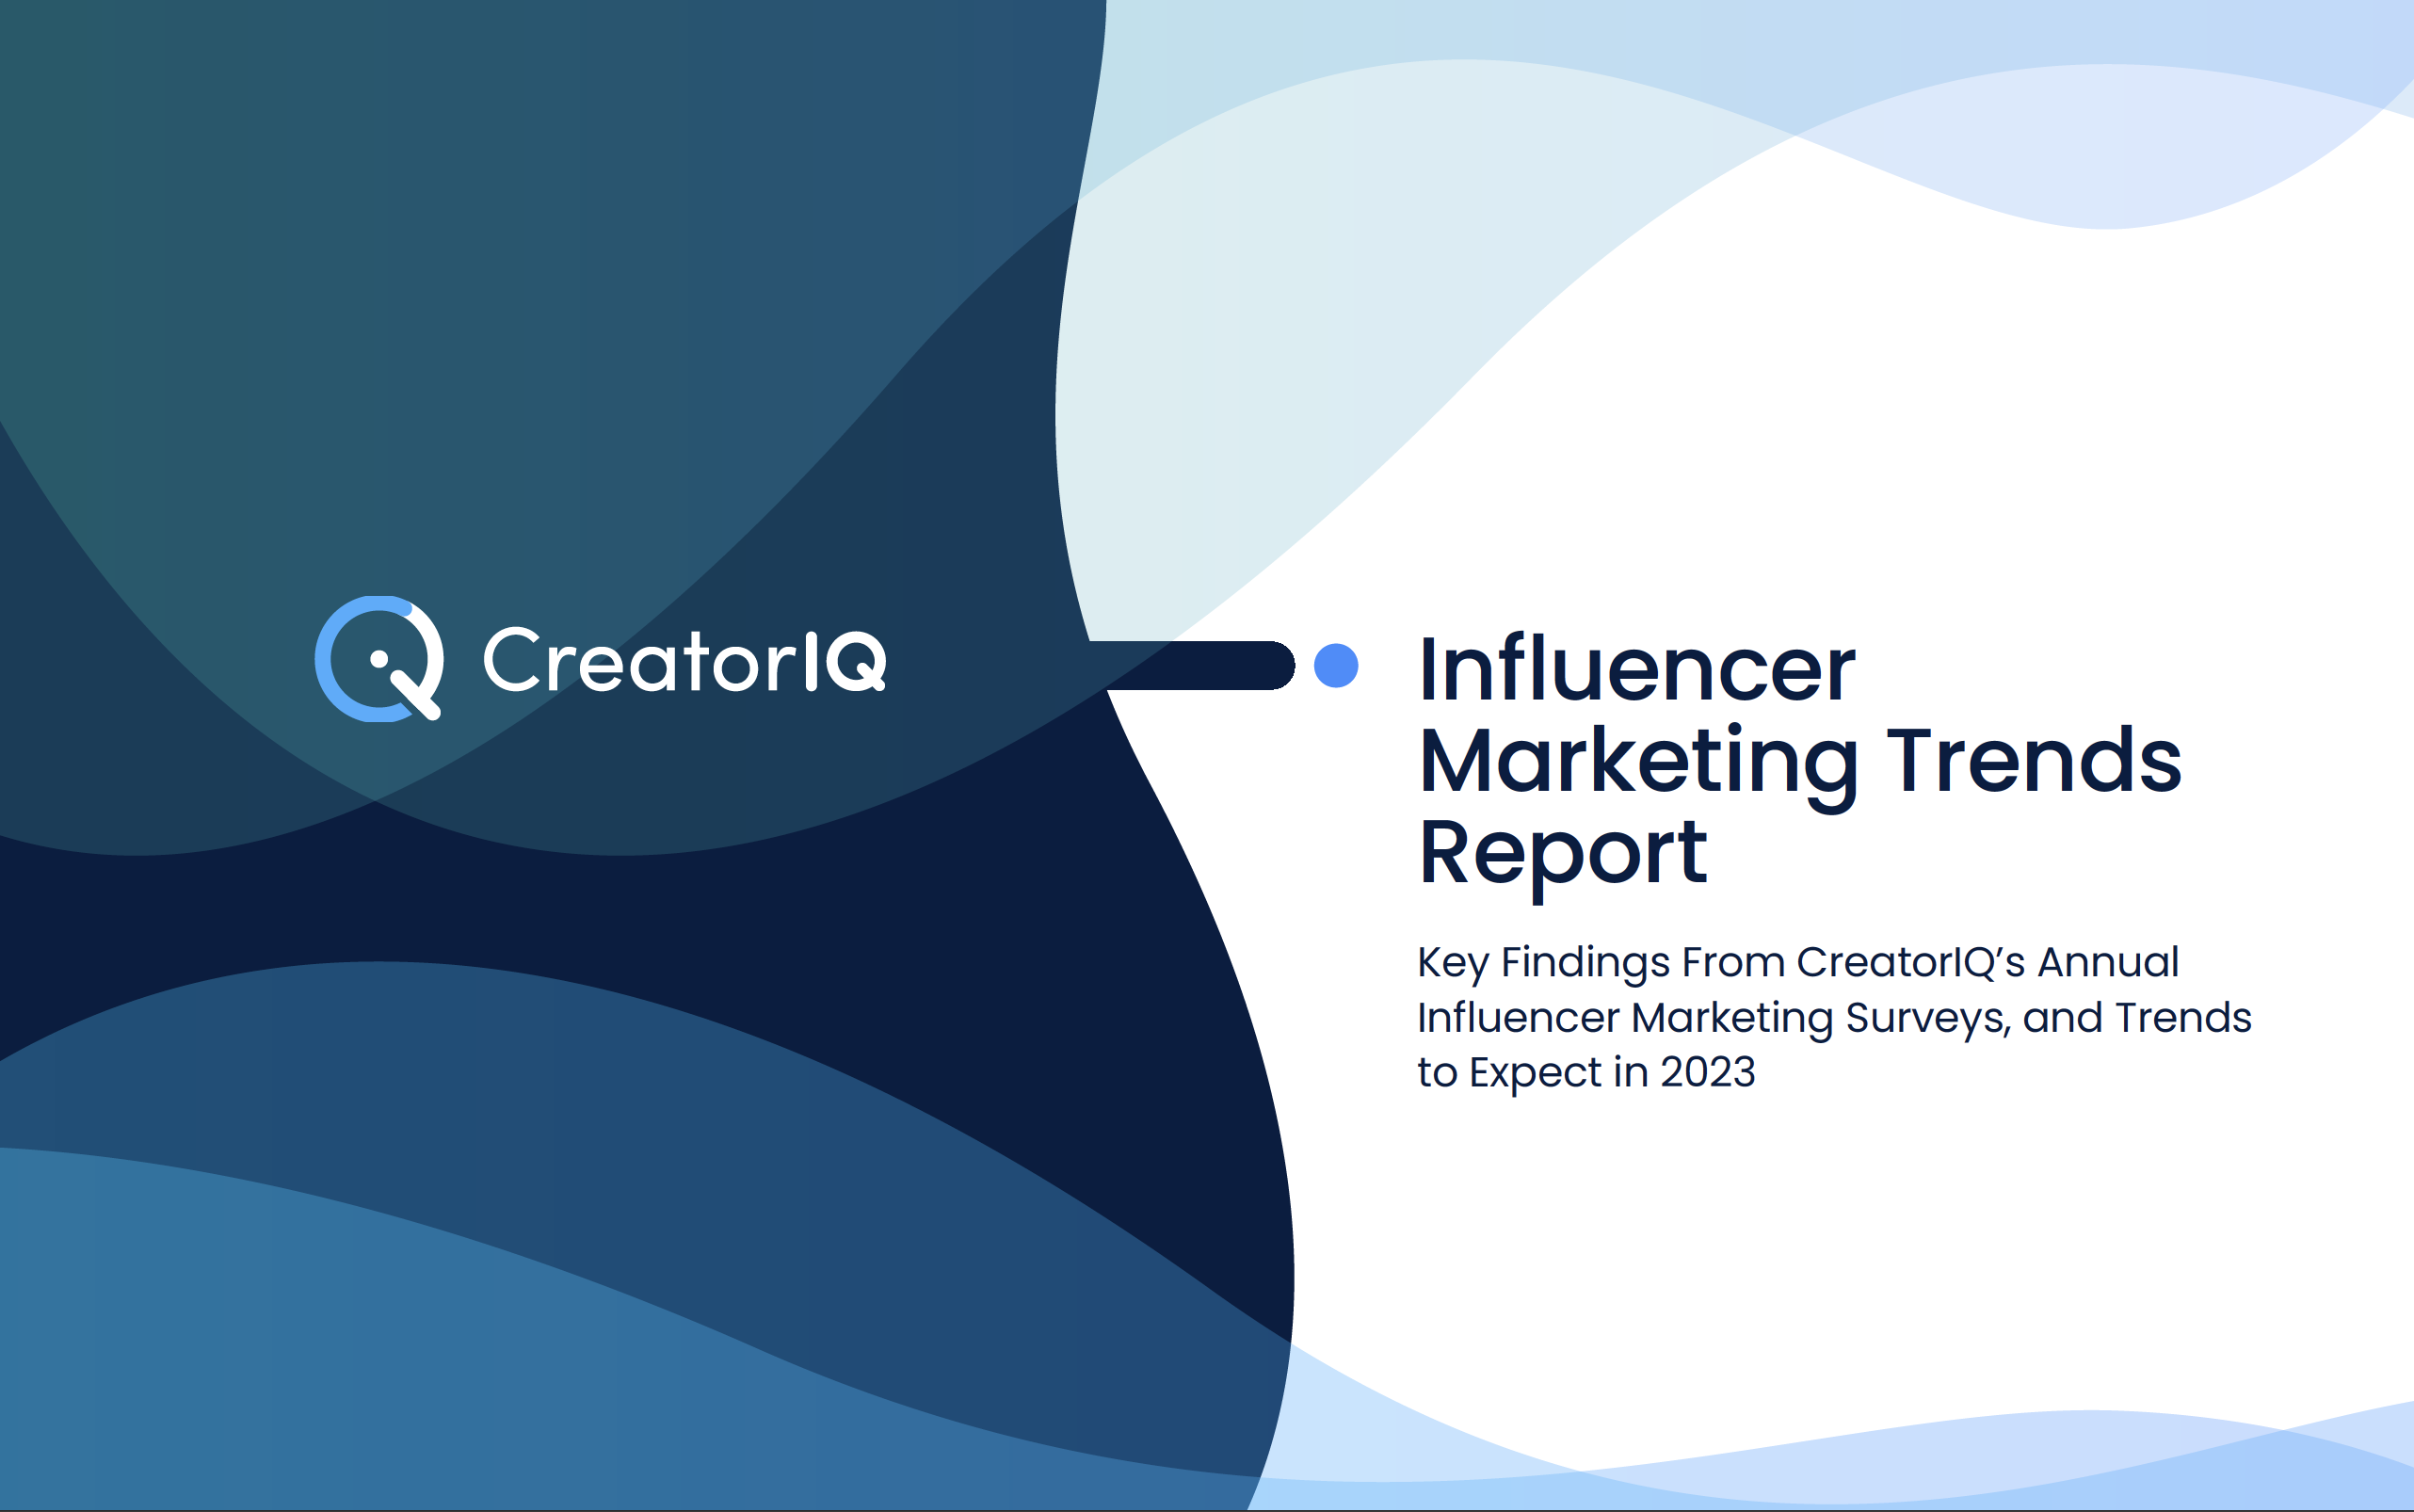 Influencer Marketing Trends Report